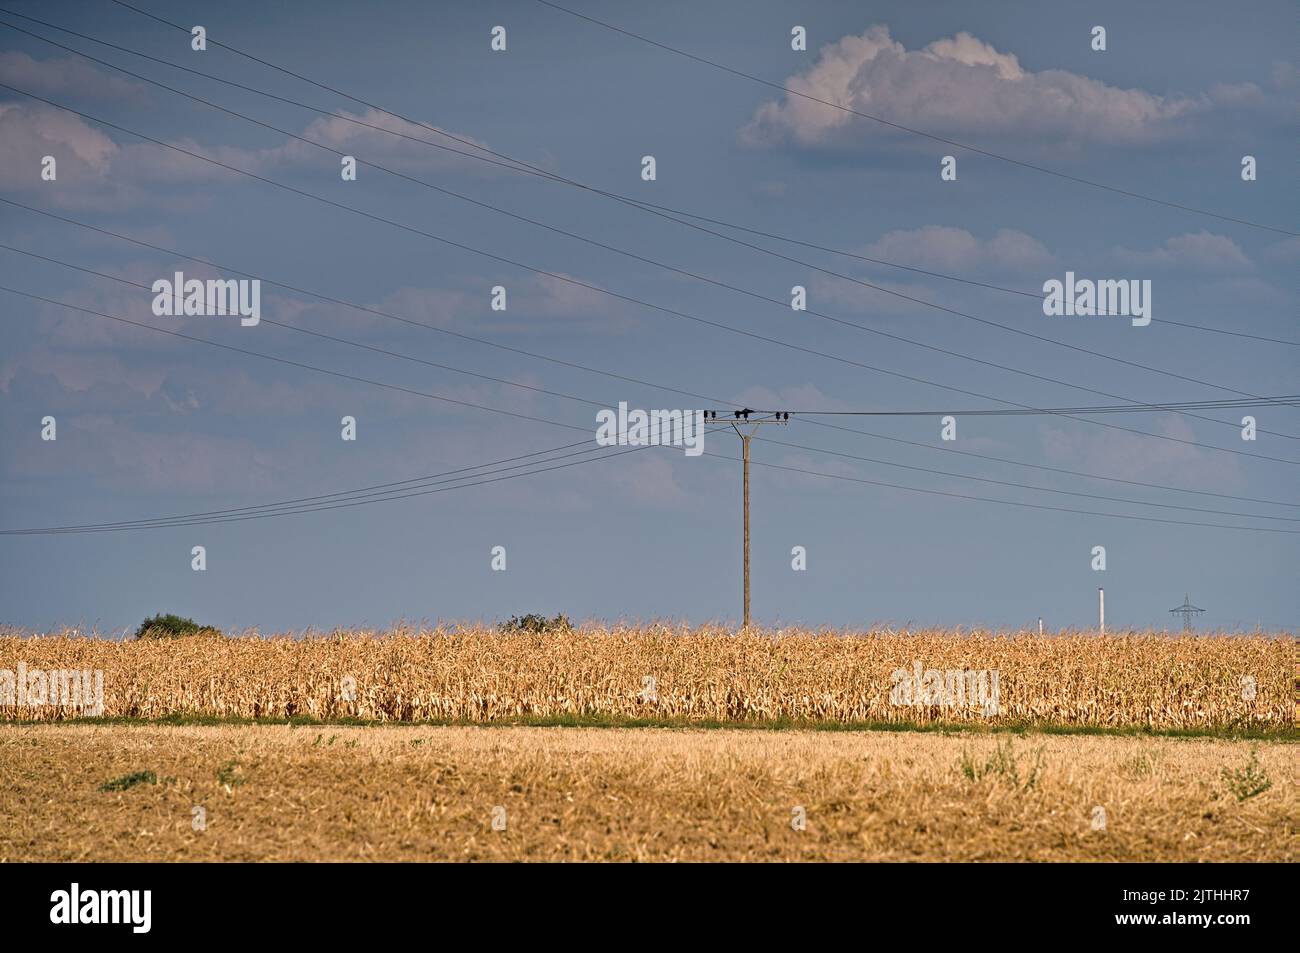 Power line in rural landscape Stock Photo